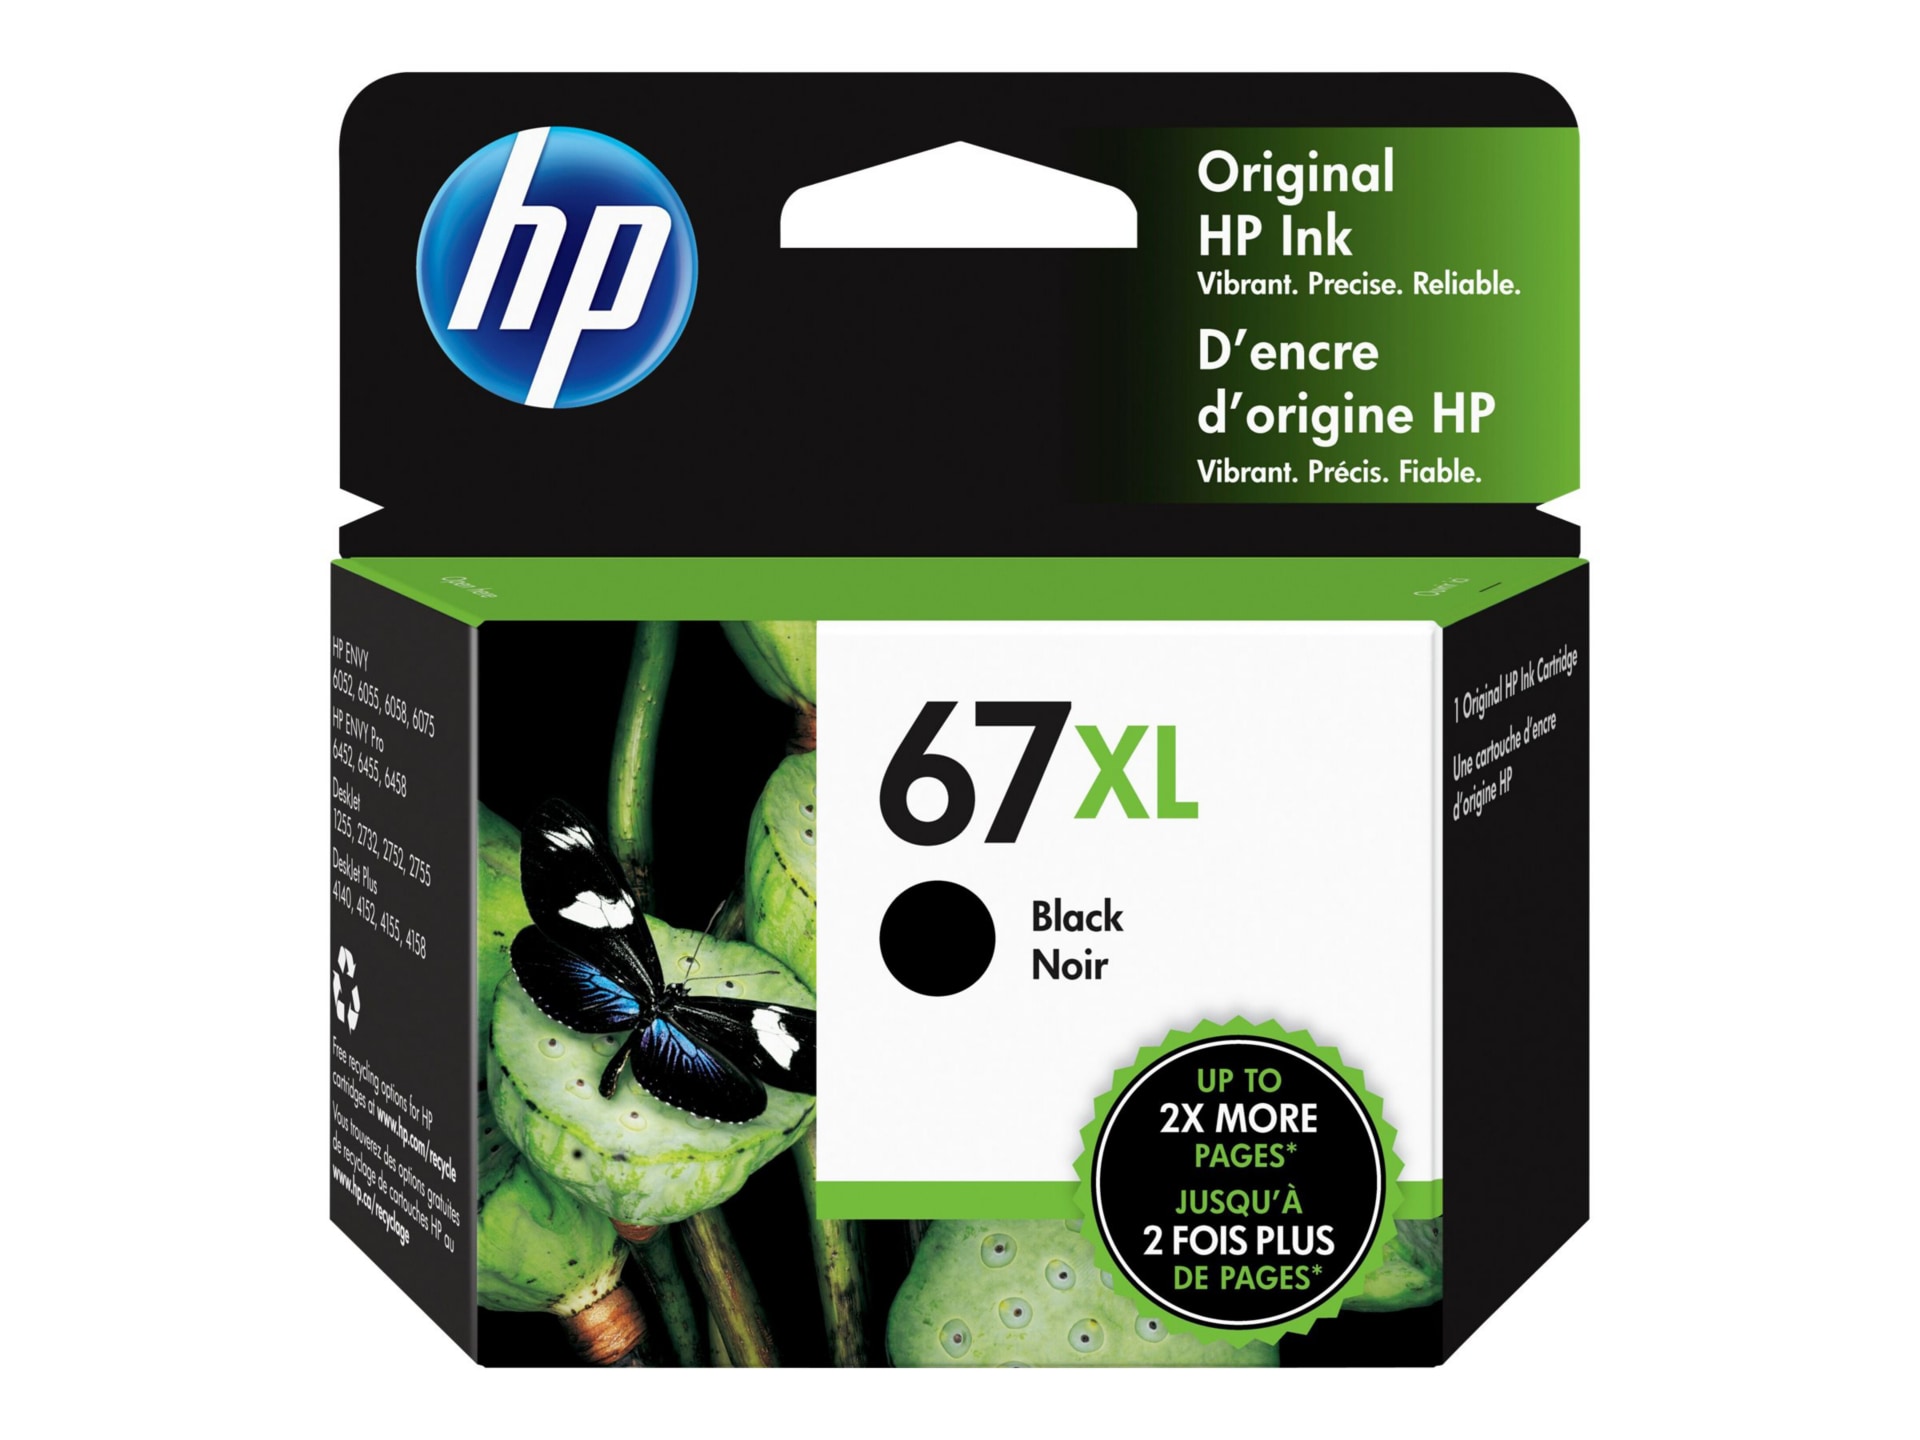 HP 67XL Original High Yield Inkjet Ink Cartridge - Black - 1 Pack